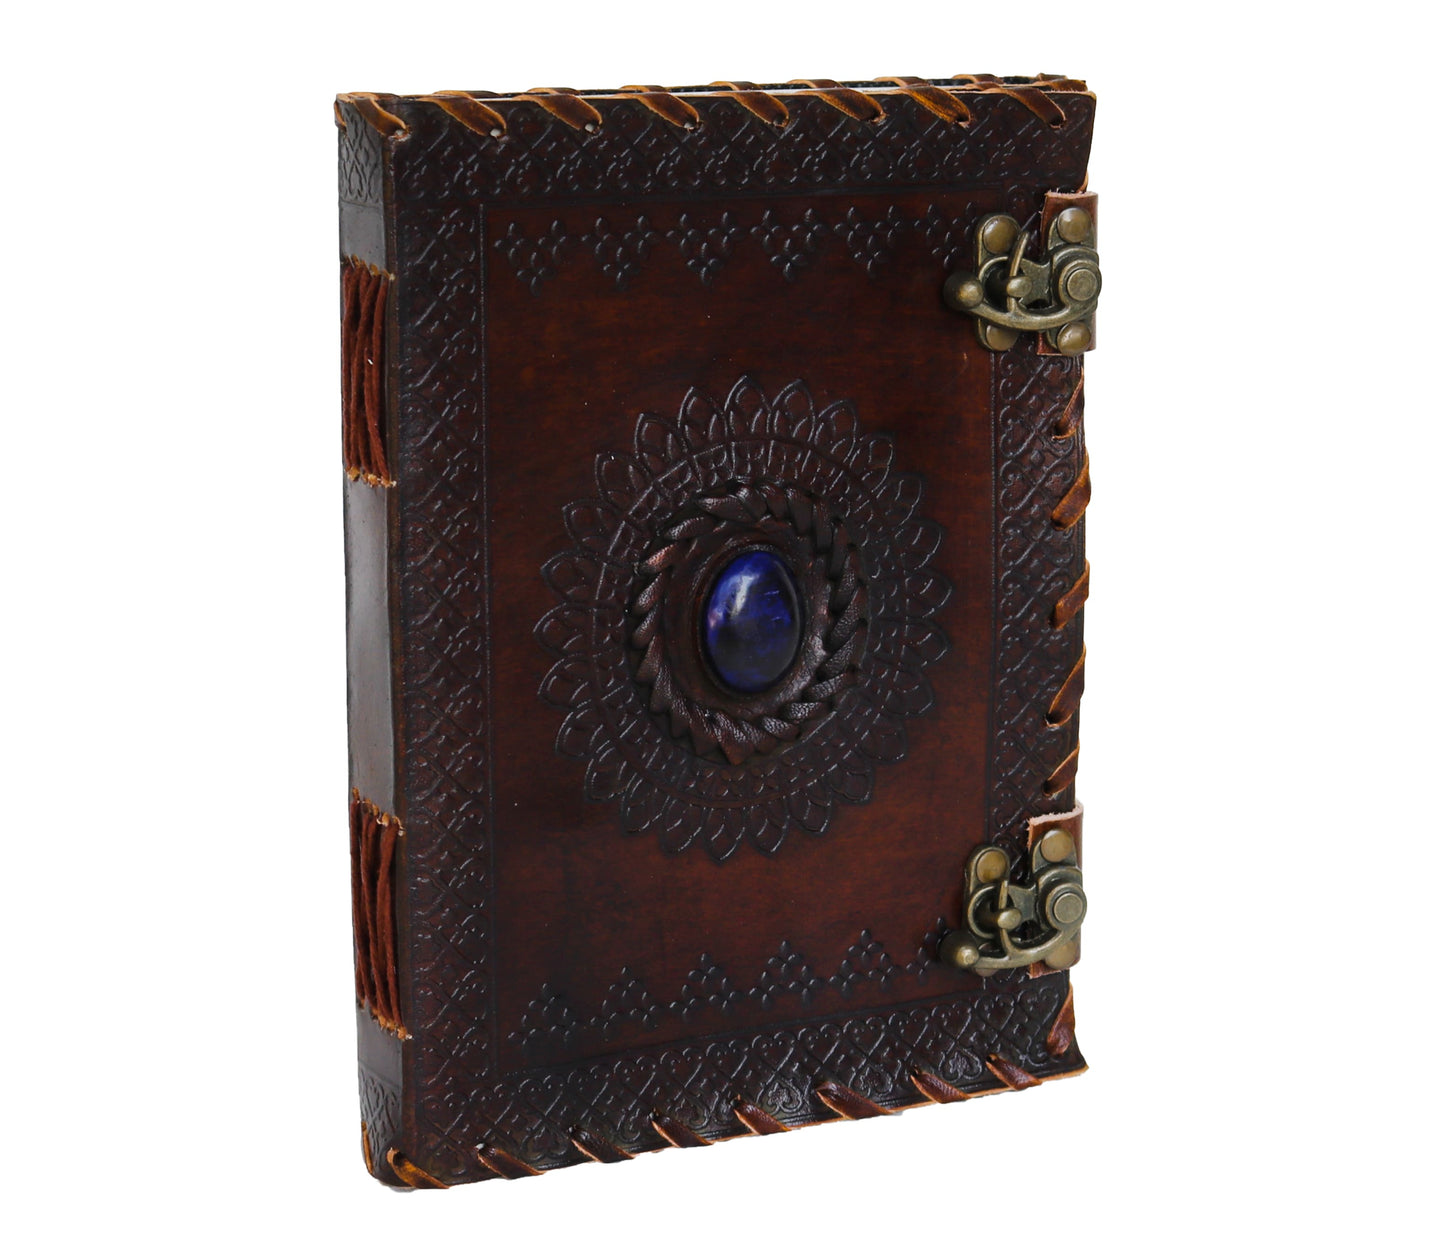 Mystical Blue Stone Journal with 2 Locks